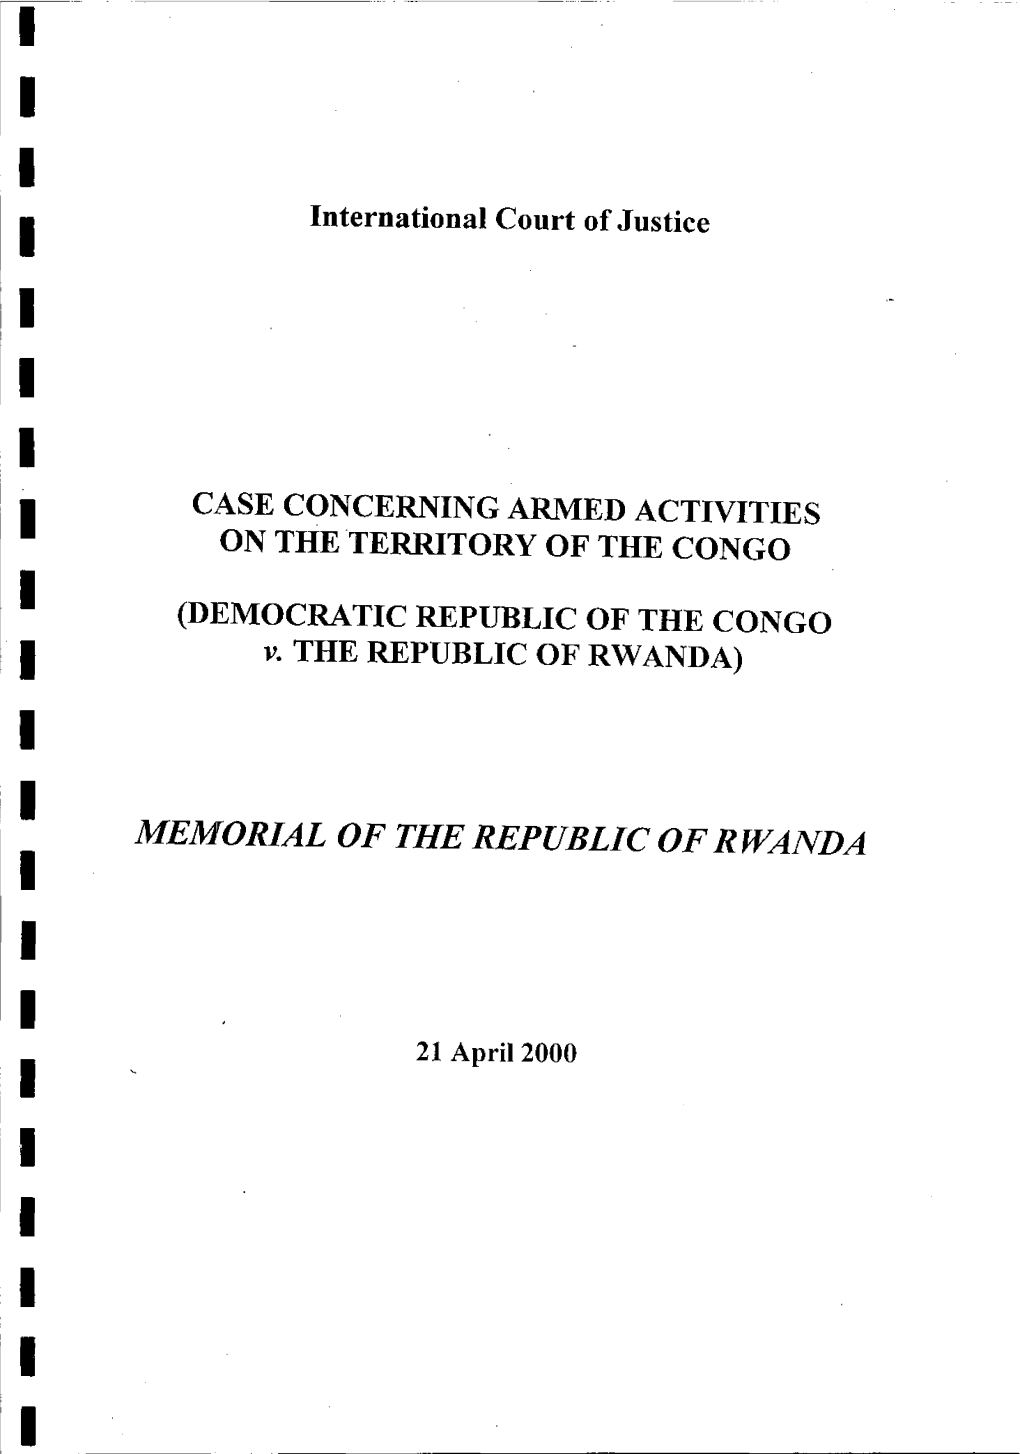 MEMORIAL of the REPUBLIC of RWANDA 1 1 1 ,L 21 April 2000